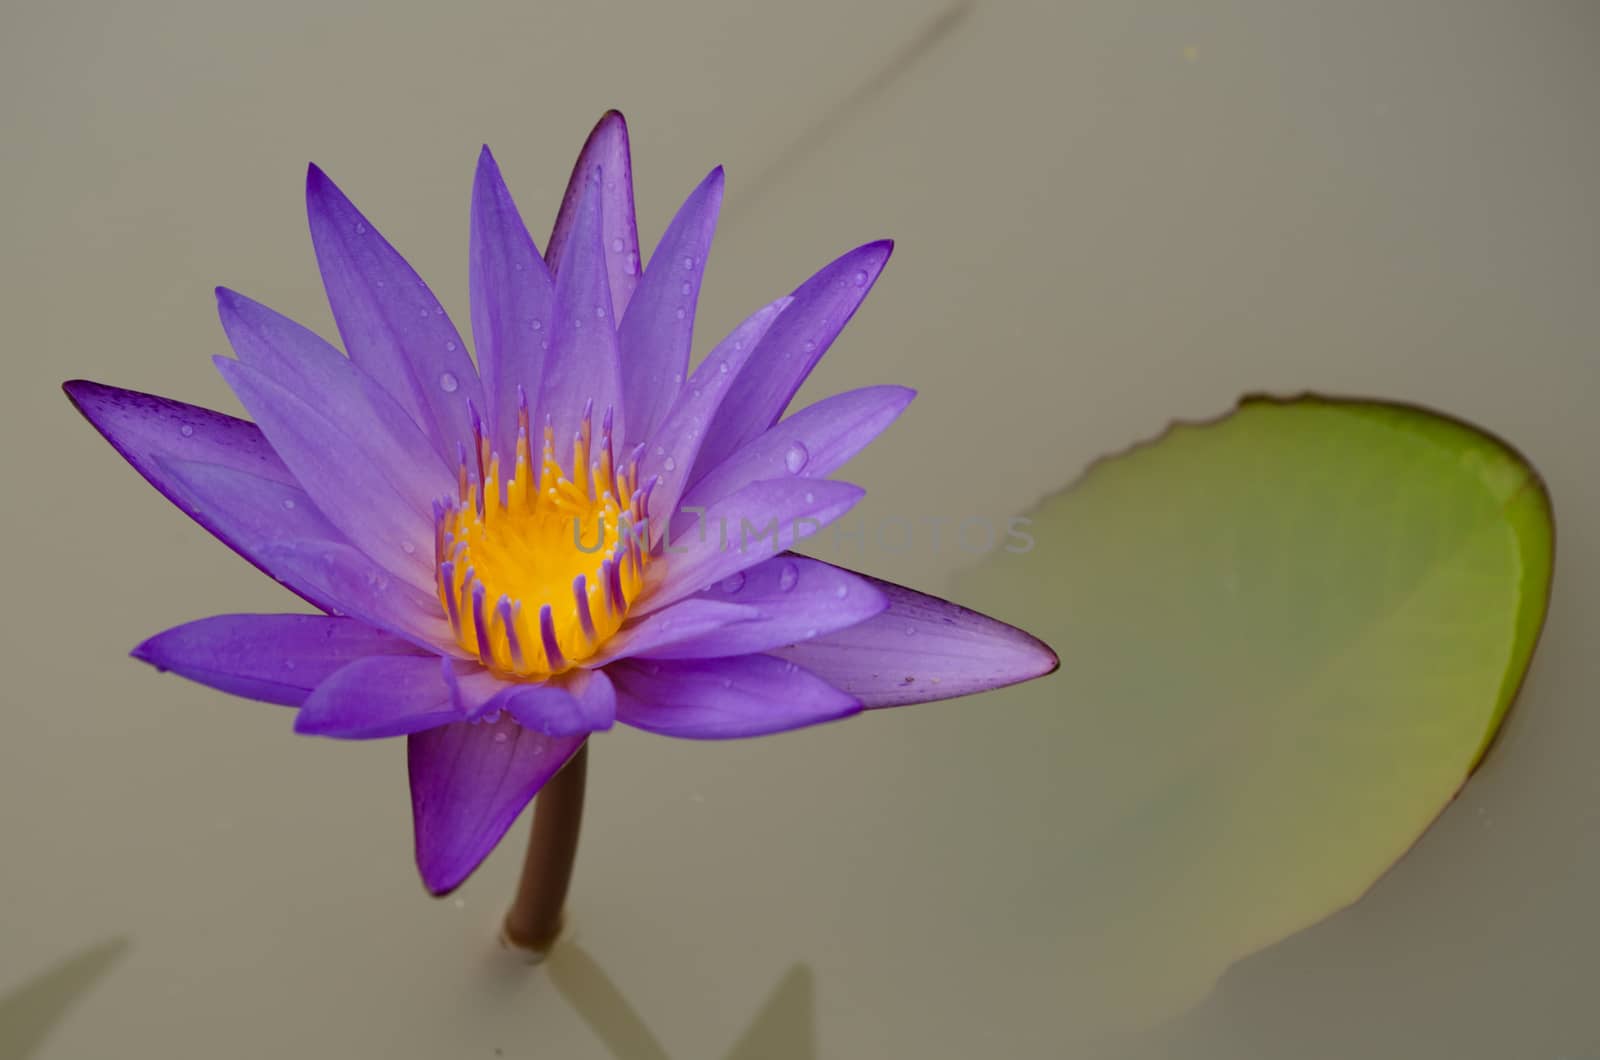 Lotus Flower is one of two extant species of aquatic plant in the family Nelumbonaceae.